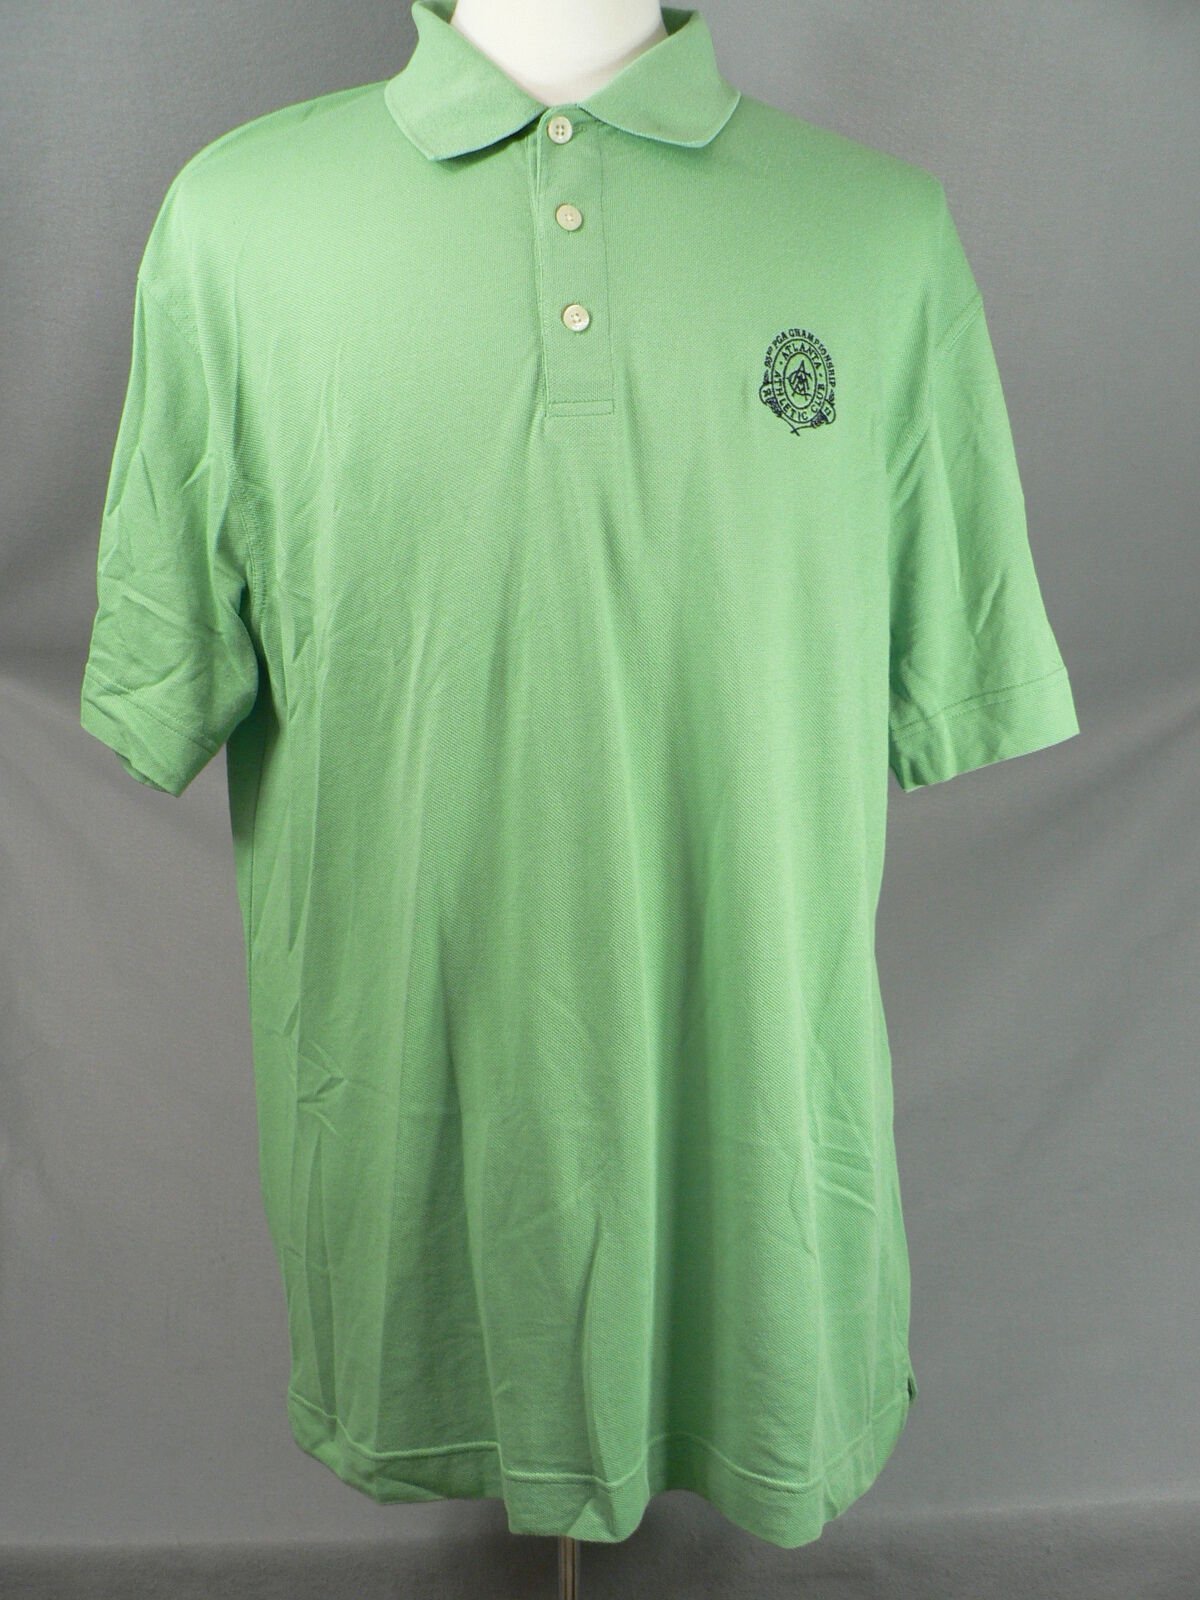 Cutter & Buck 93rd PGA Championship Golf Shirt Embroidered Atlanta Athletic Club